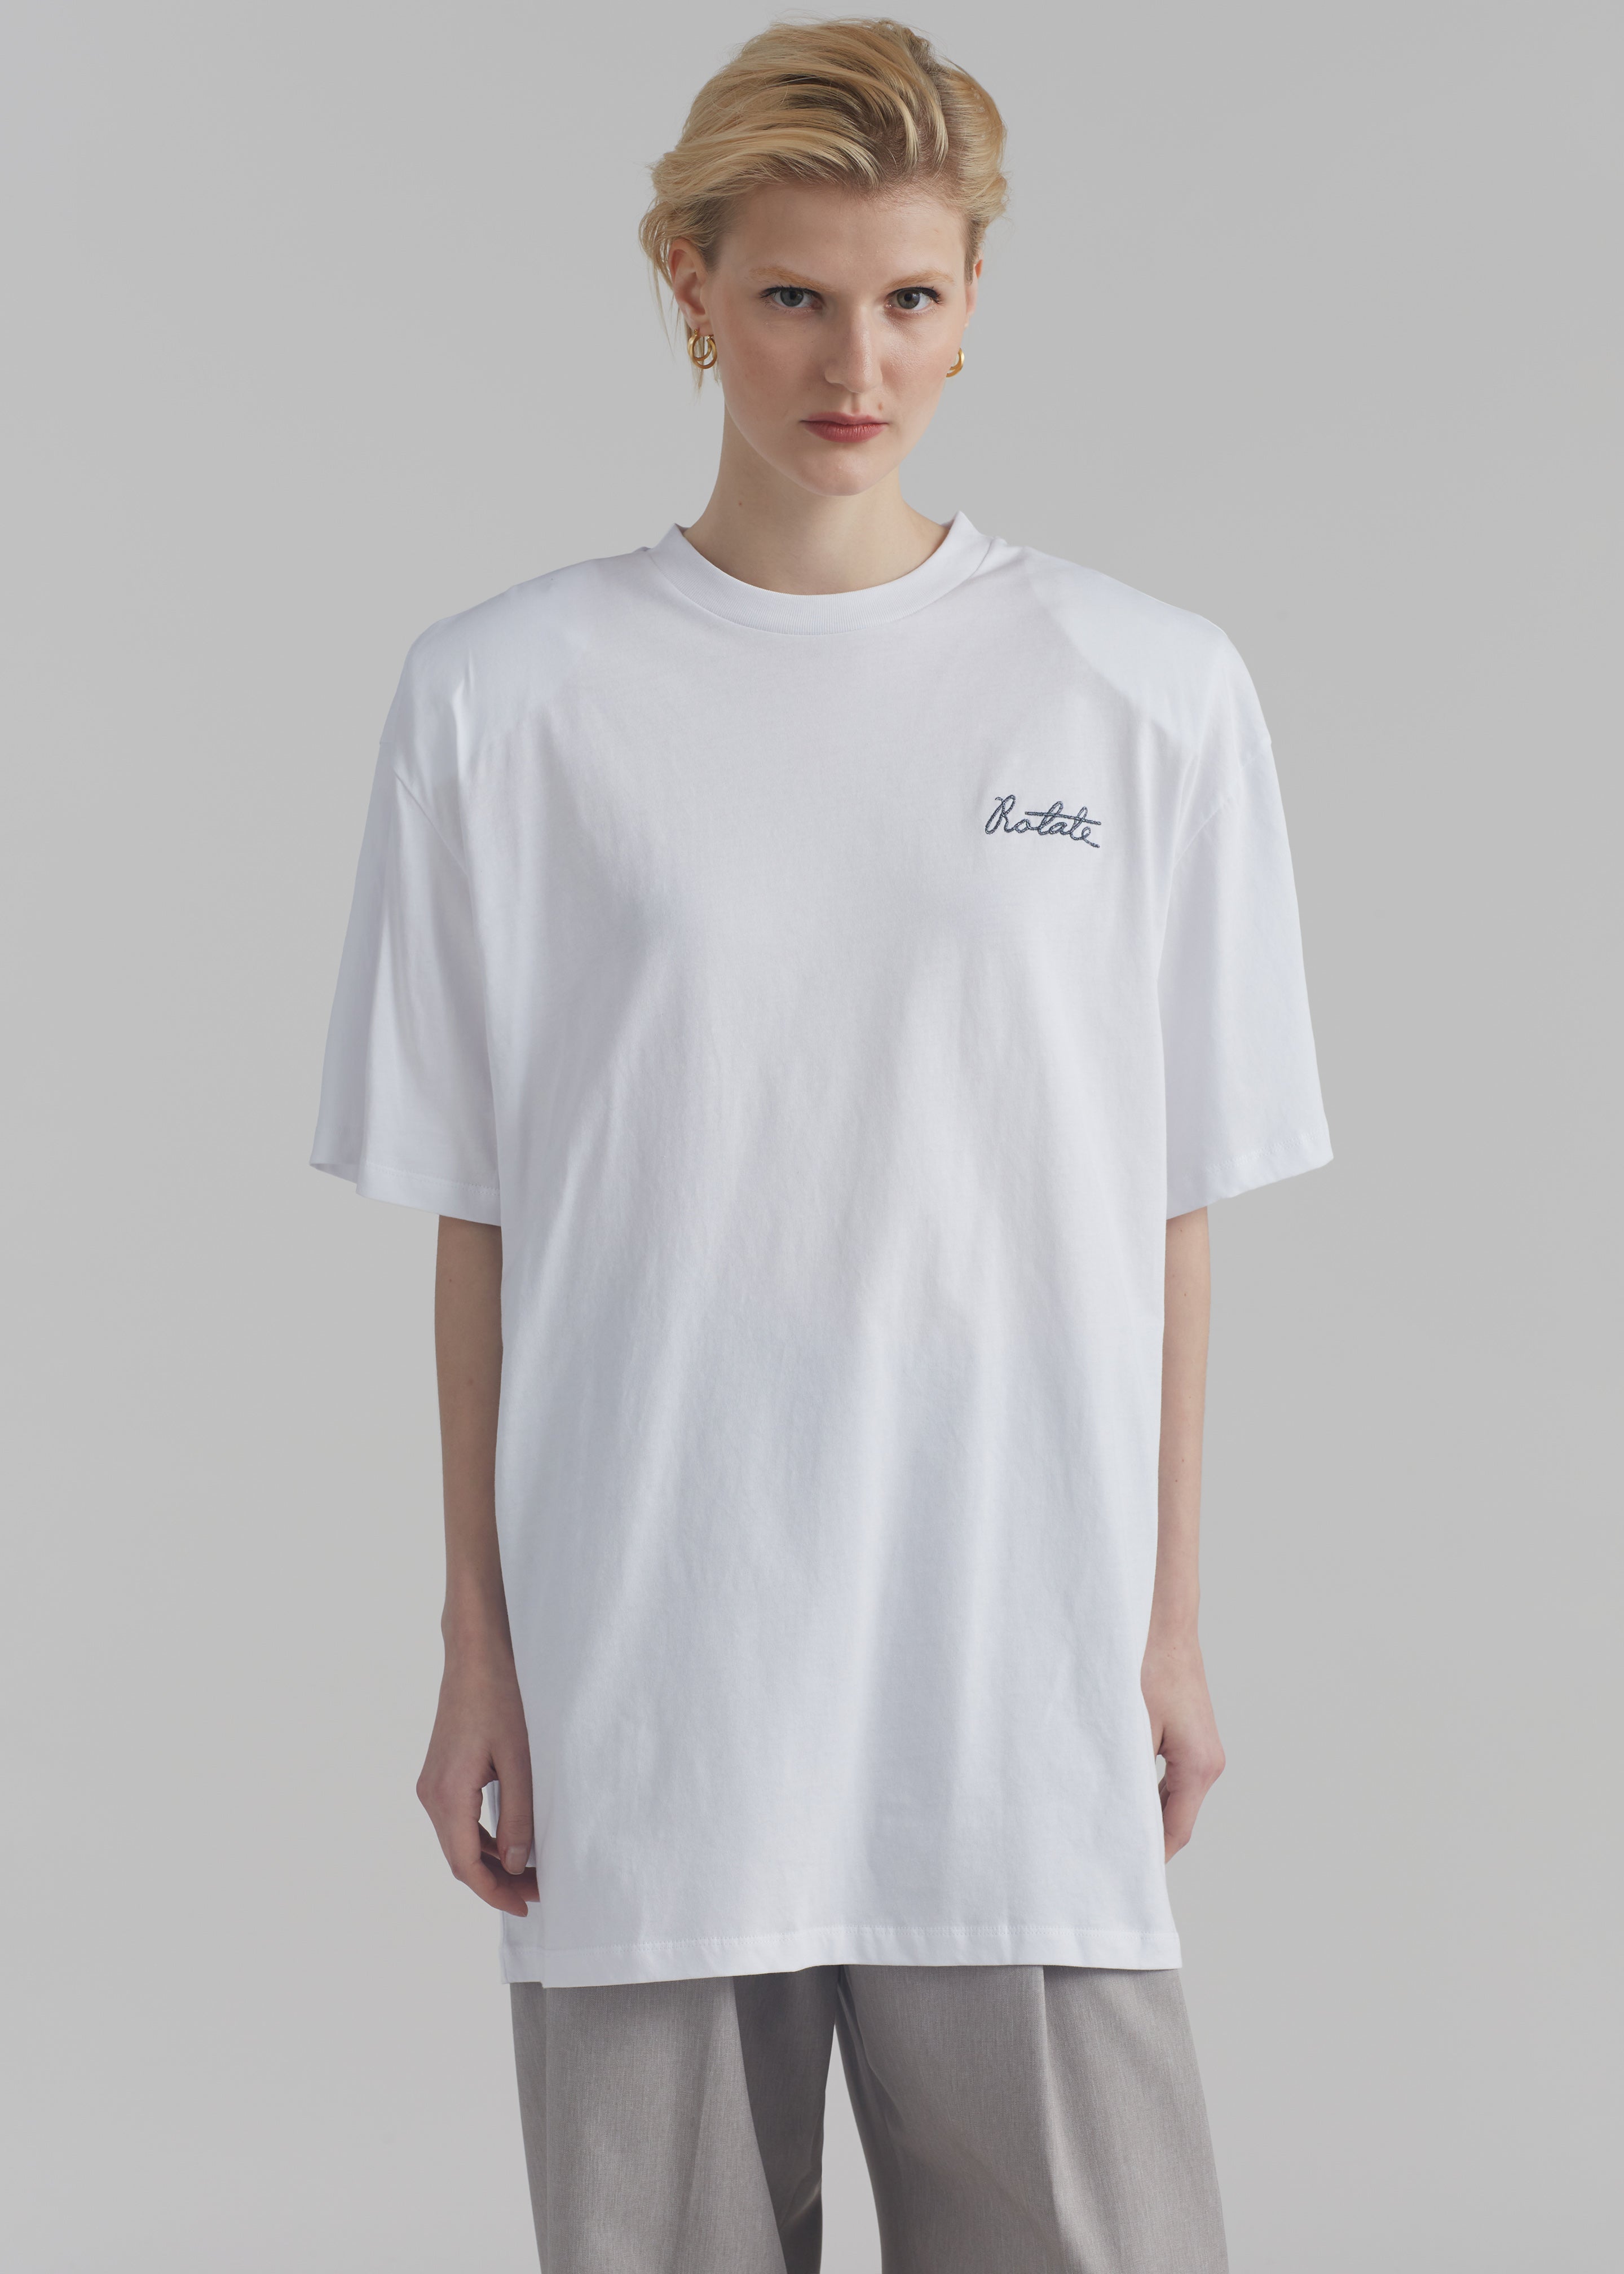 Rotate Oversized Logo T-Shirt - Bright White - 2